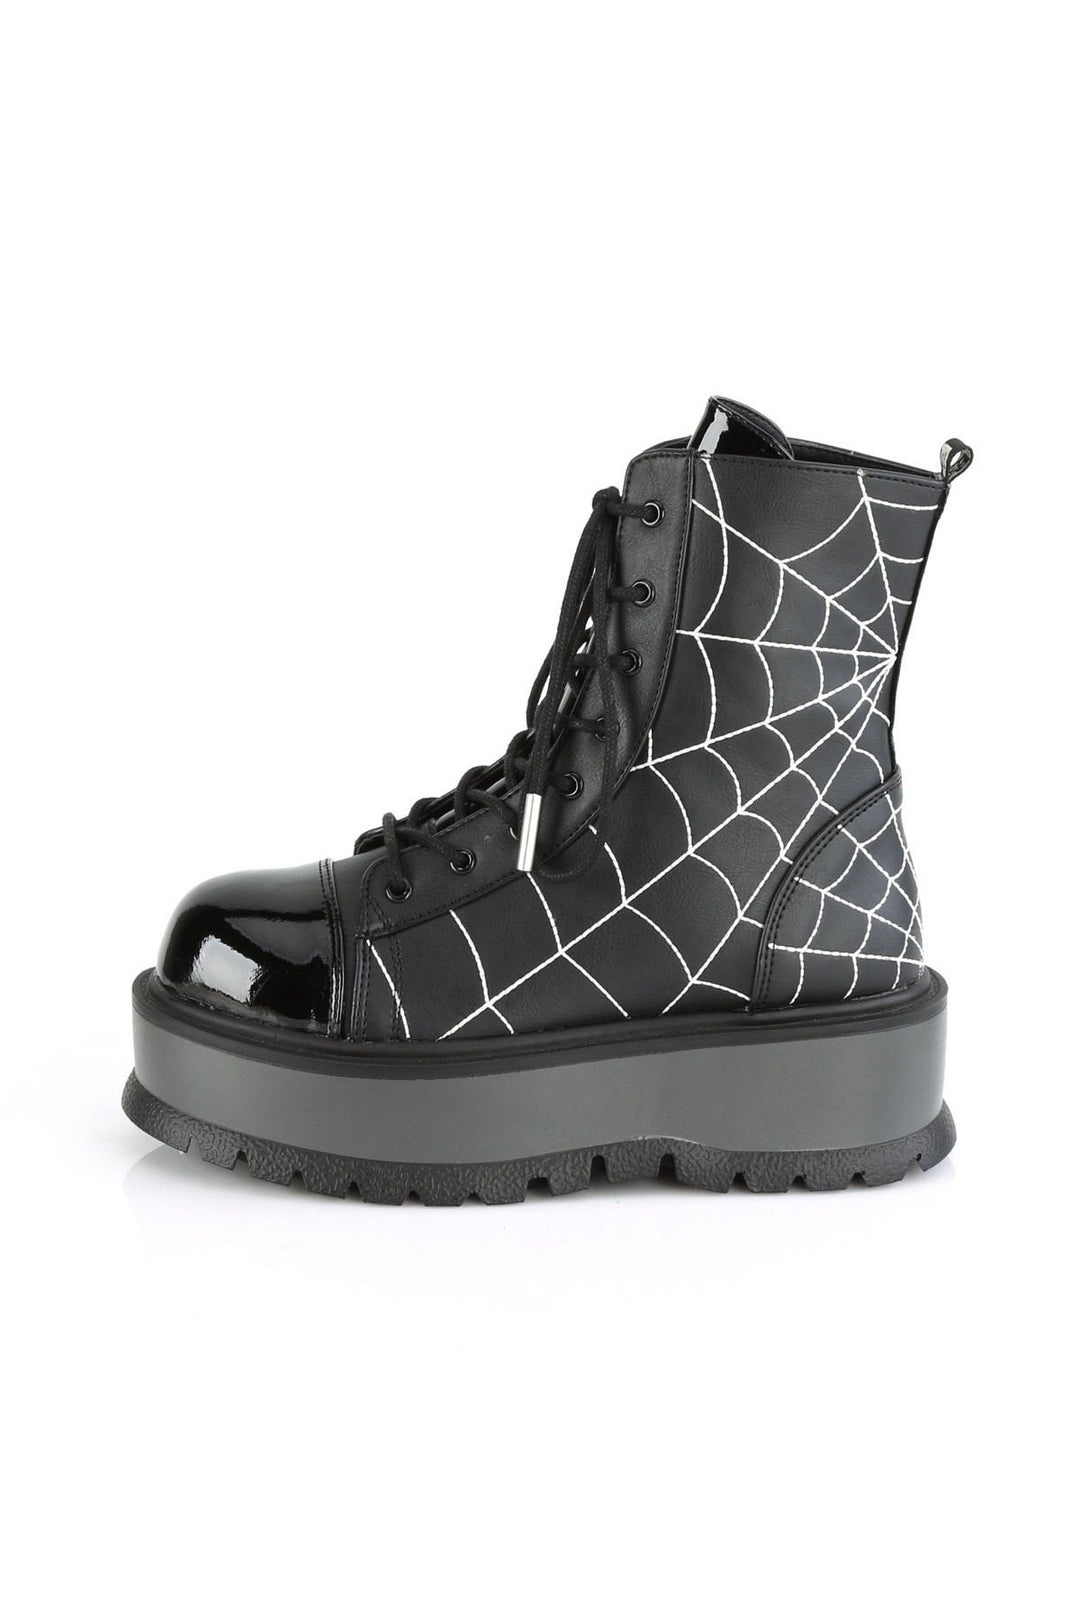 Spiderweb SLACKER-88 Boots [Black Vegan Leather]